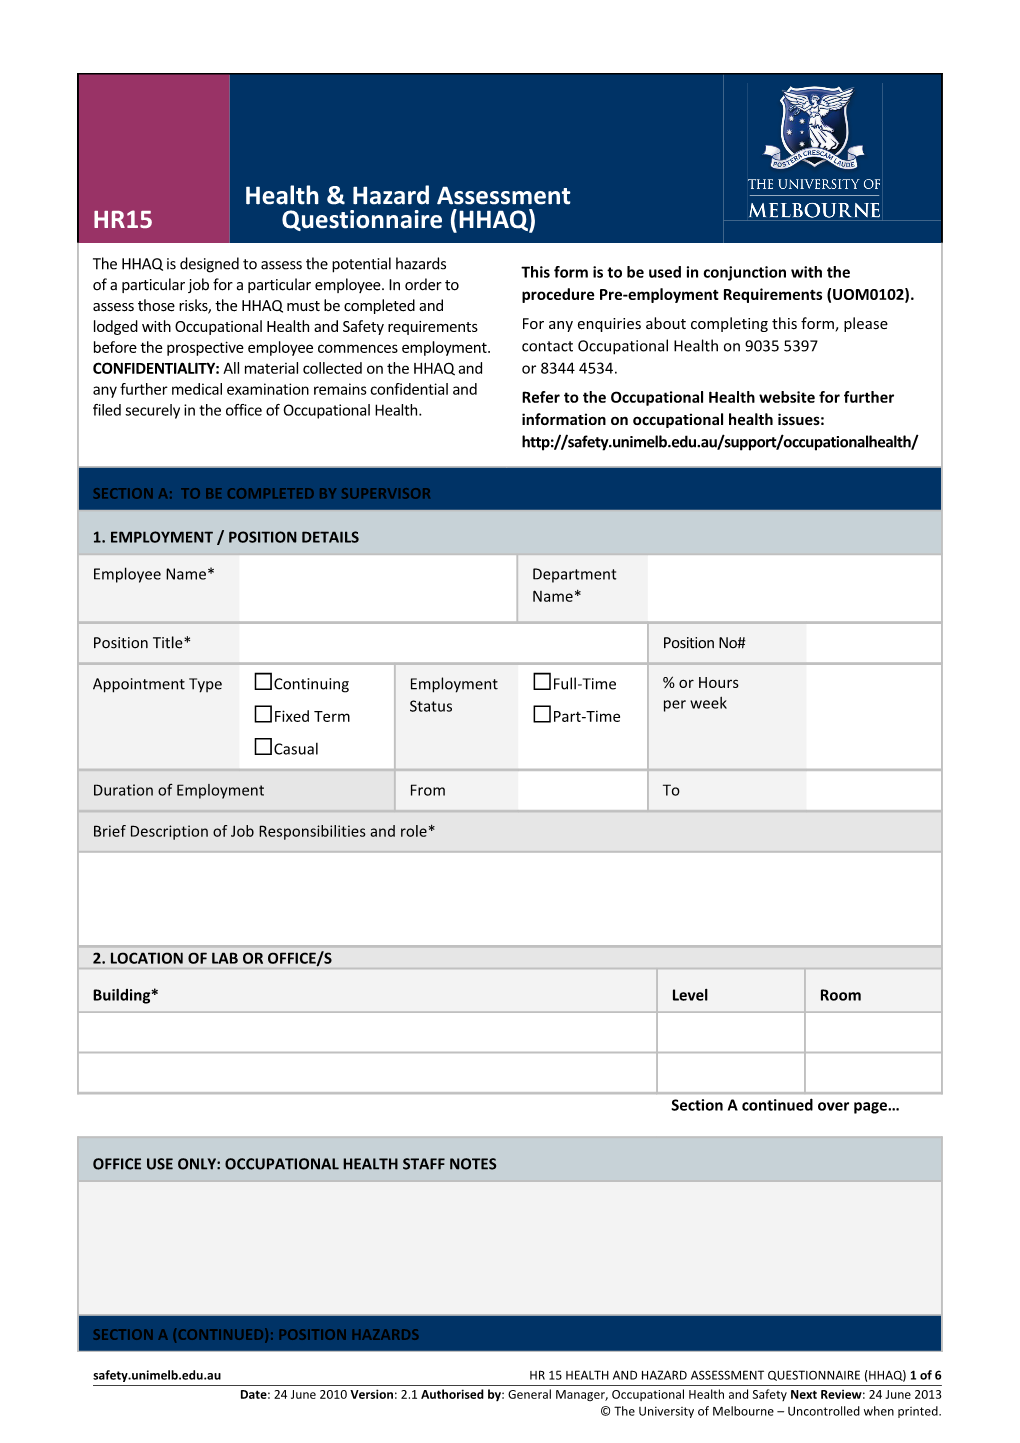 HR 15 - Health & Hazard Assessment Questionnaire (HHAQ)